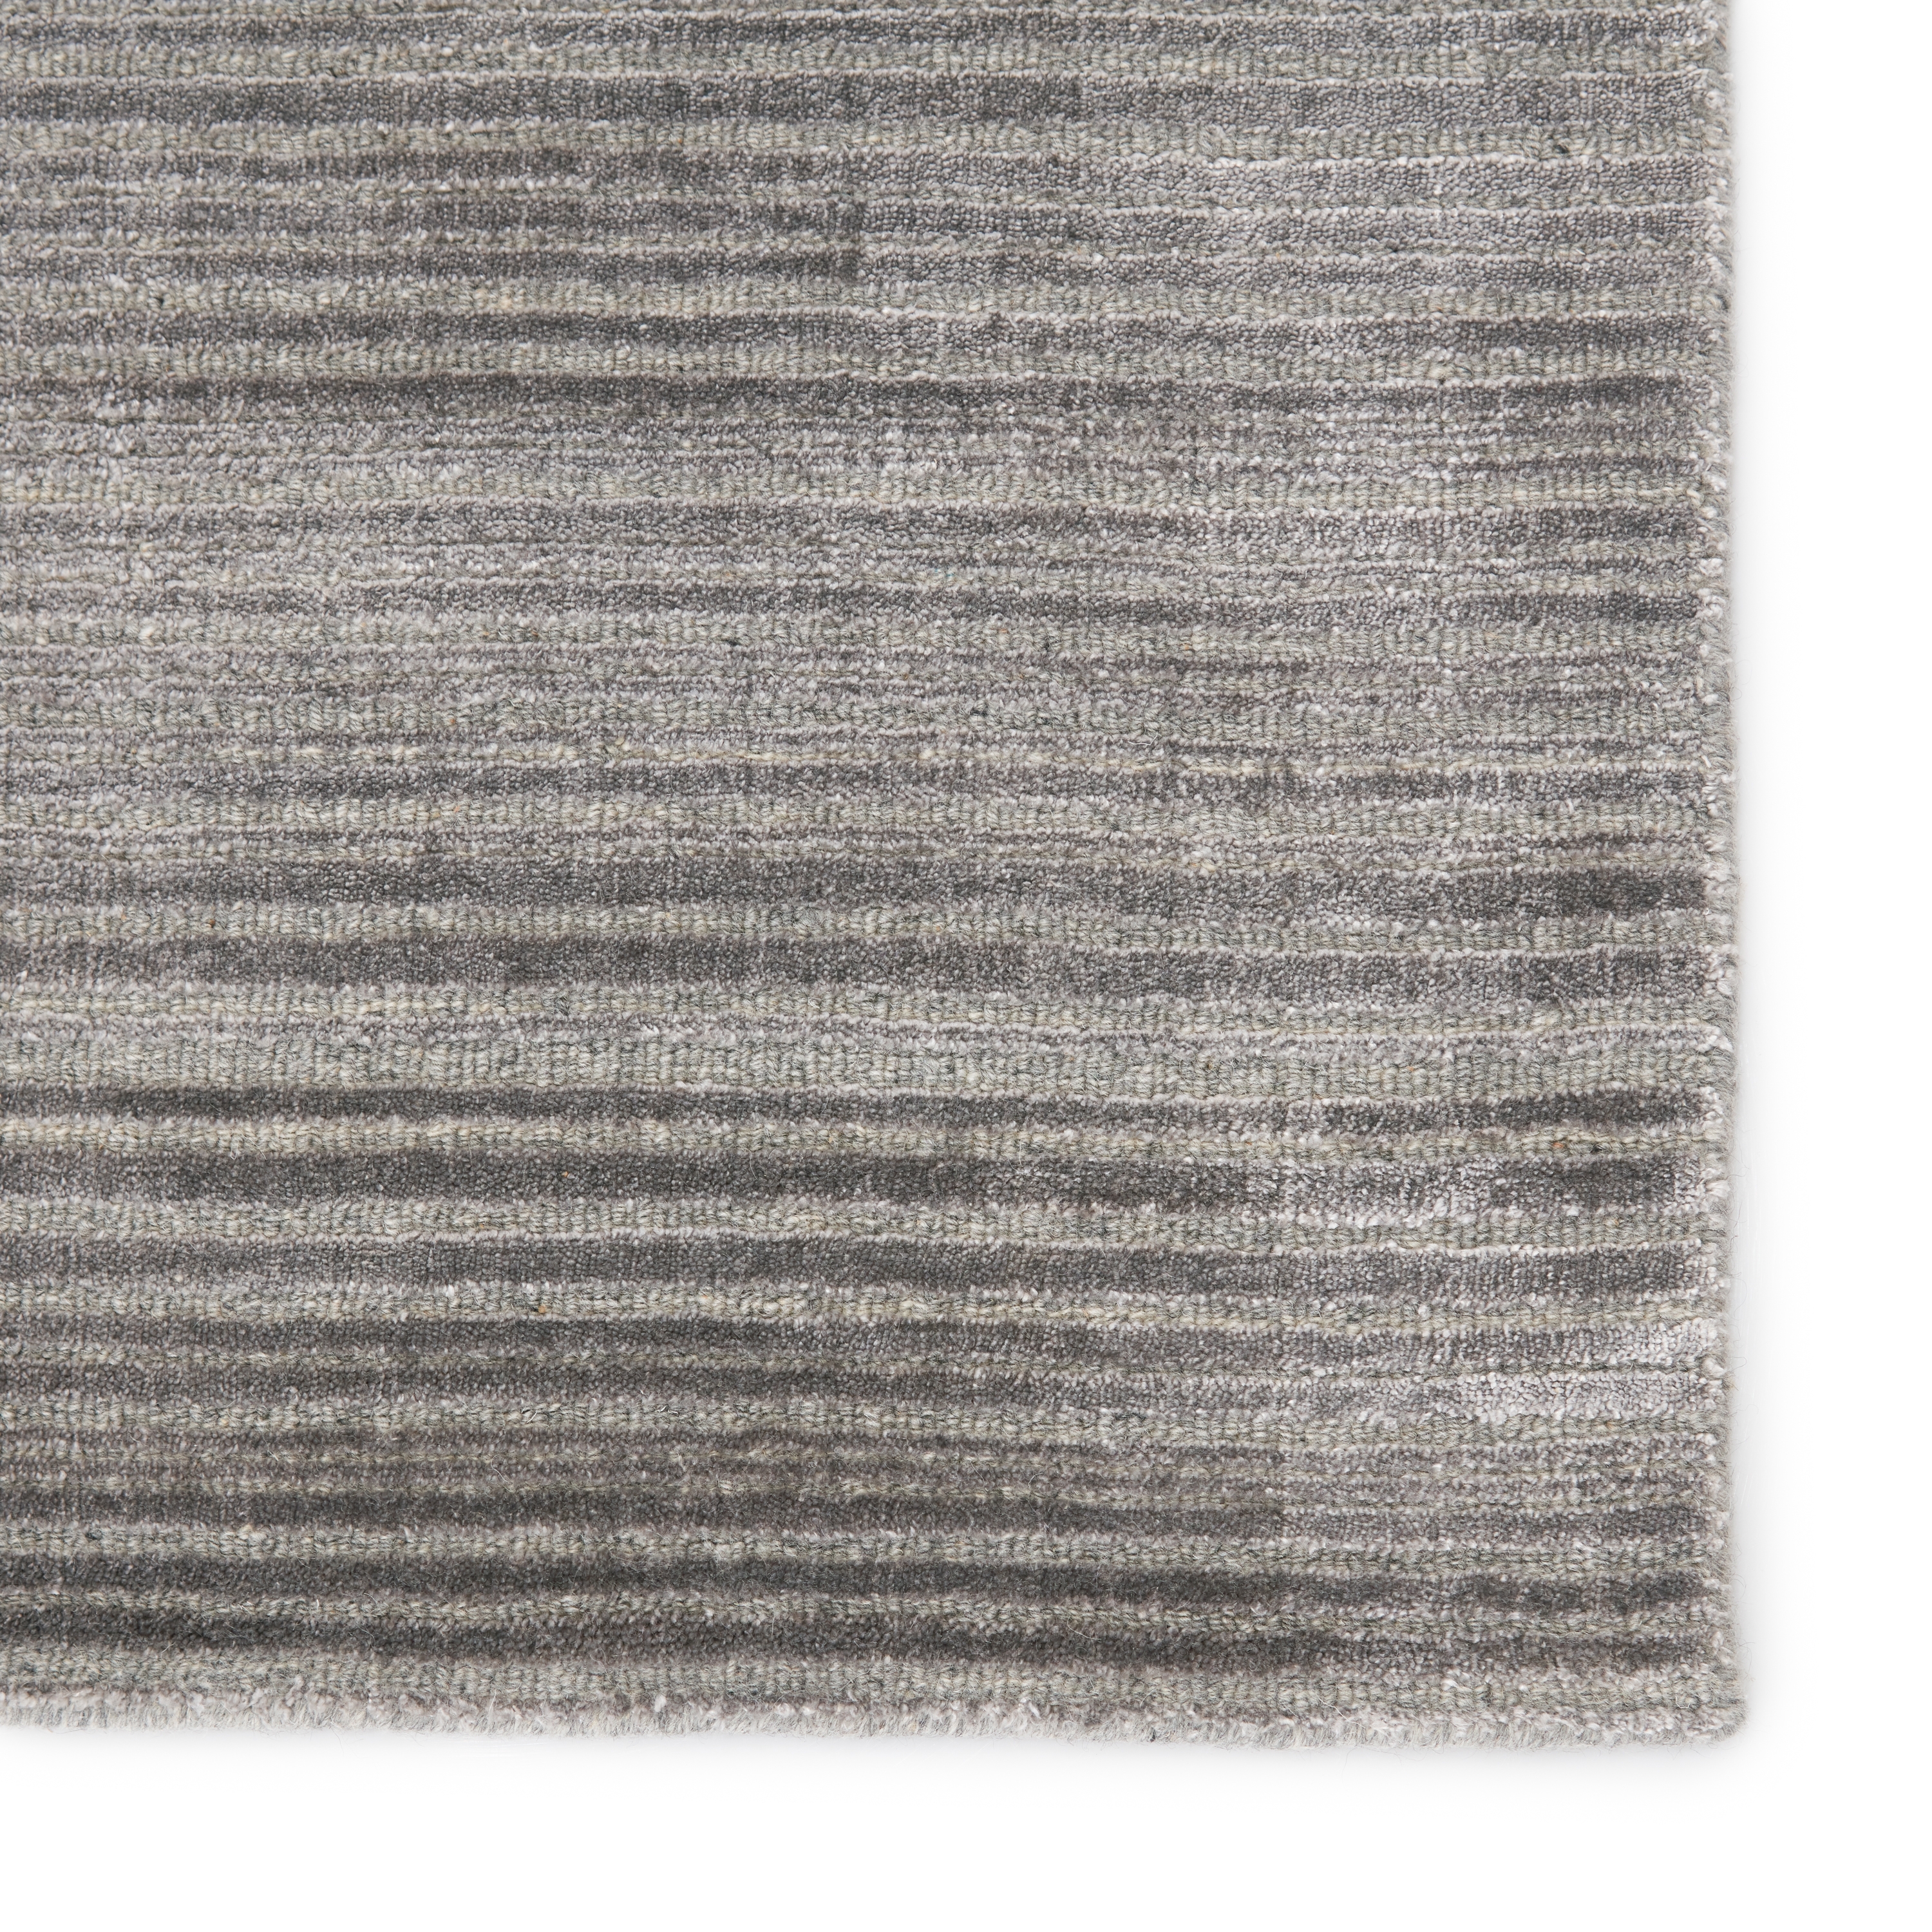 Gradient Handwoven Solid Gray/ Silver Area Rug (9'X12') - Image 3